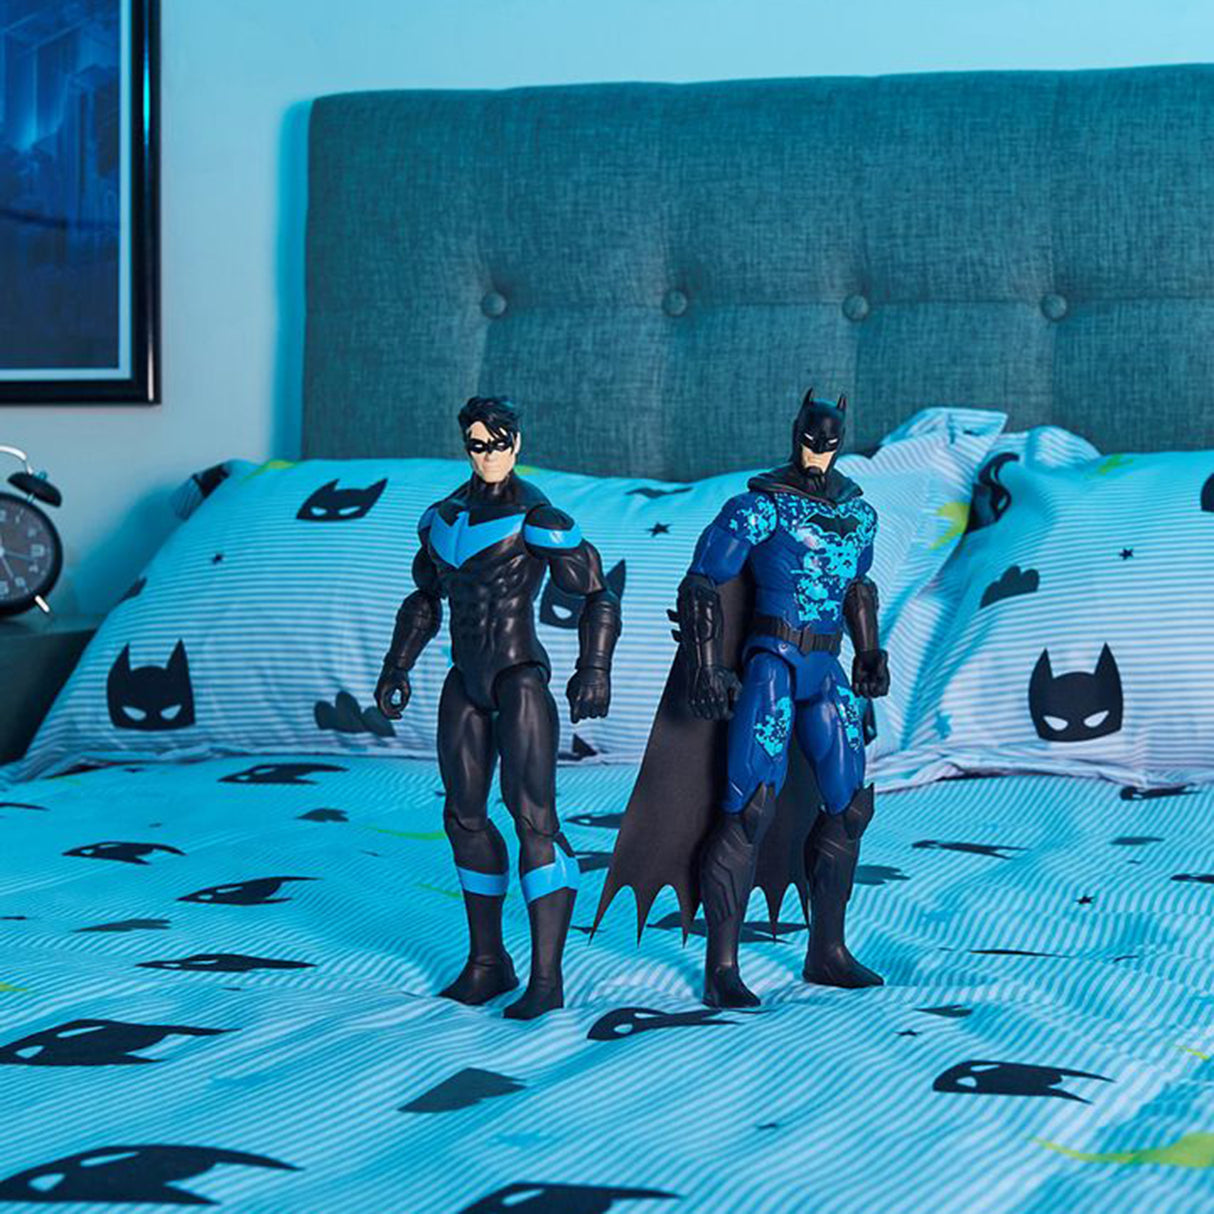 DC Batman Figurine Stealth Armor Nightwing Figure (12 inches)